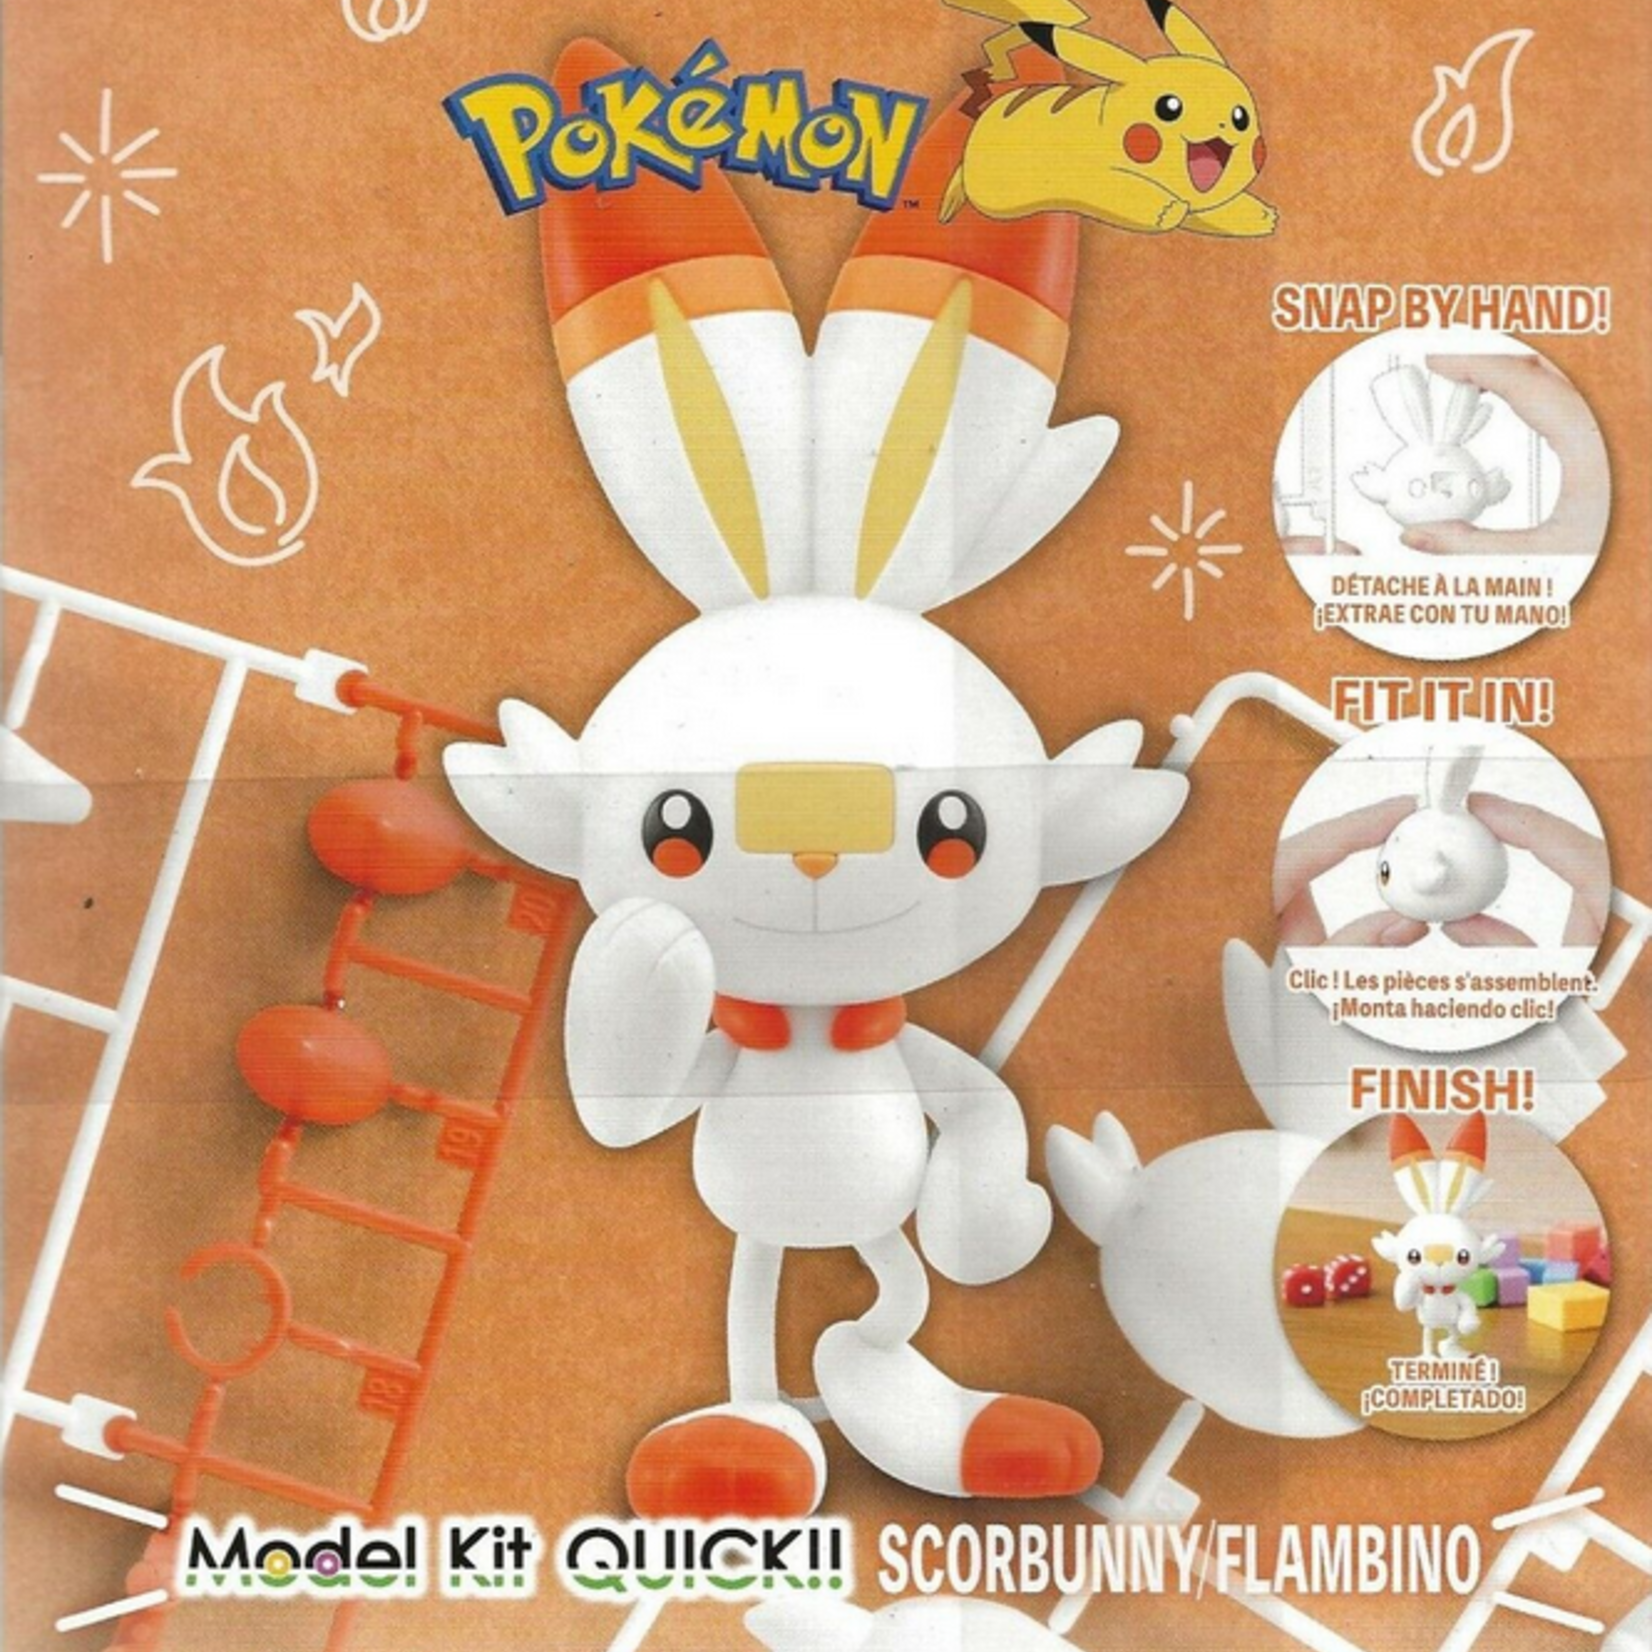 Bandai Bandai - Pokémon Model Kit QUICK!! #05 - Scorbunny/Flambino